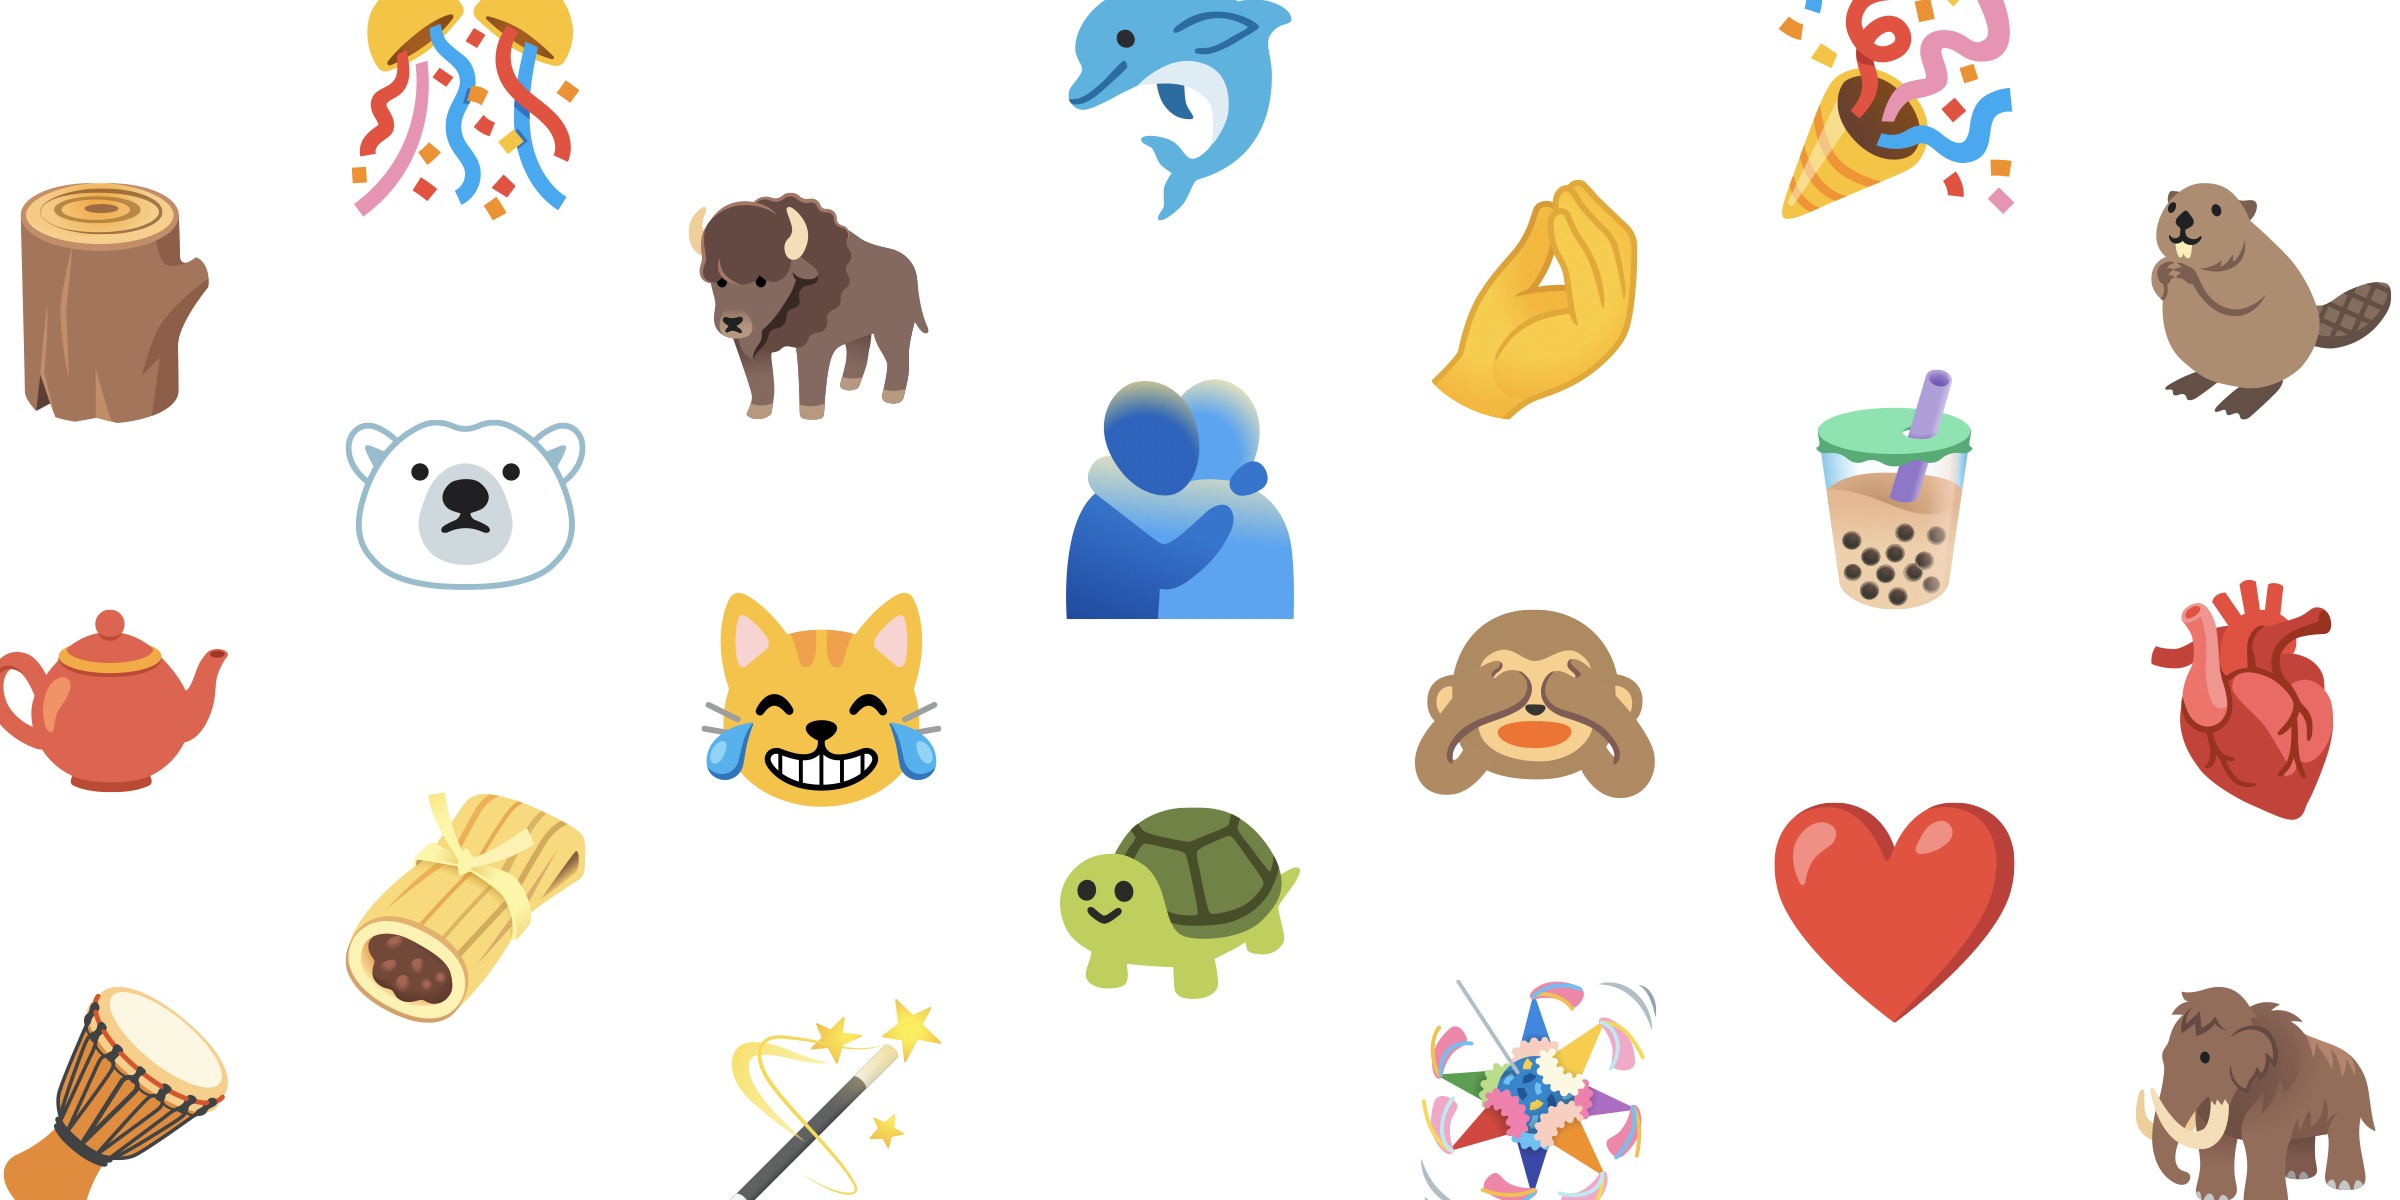 final Android 11 emoji